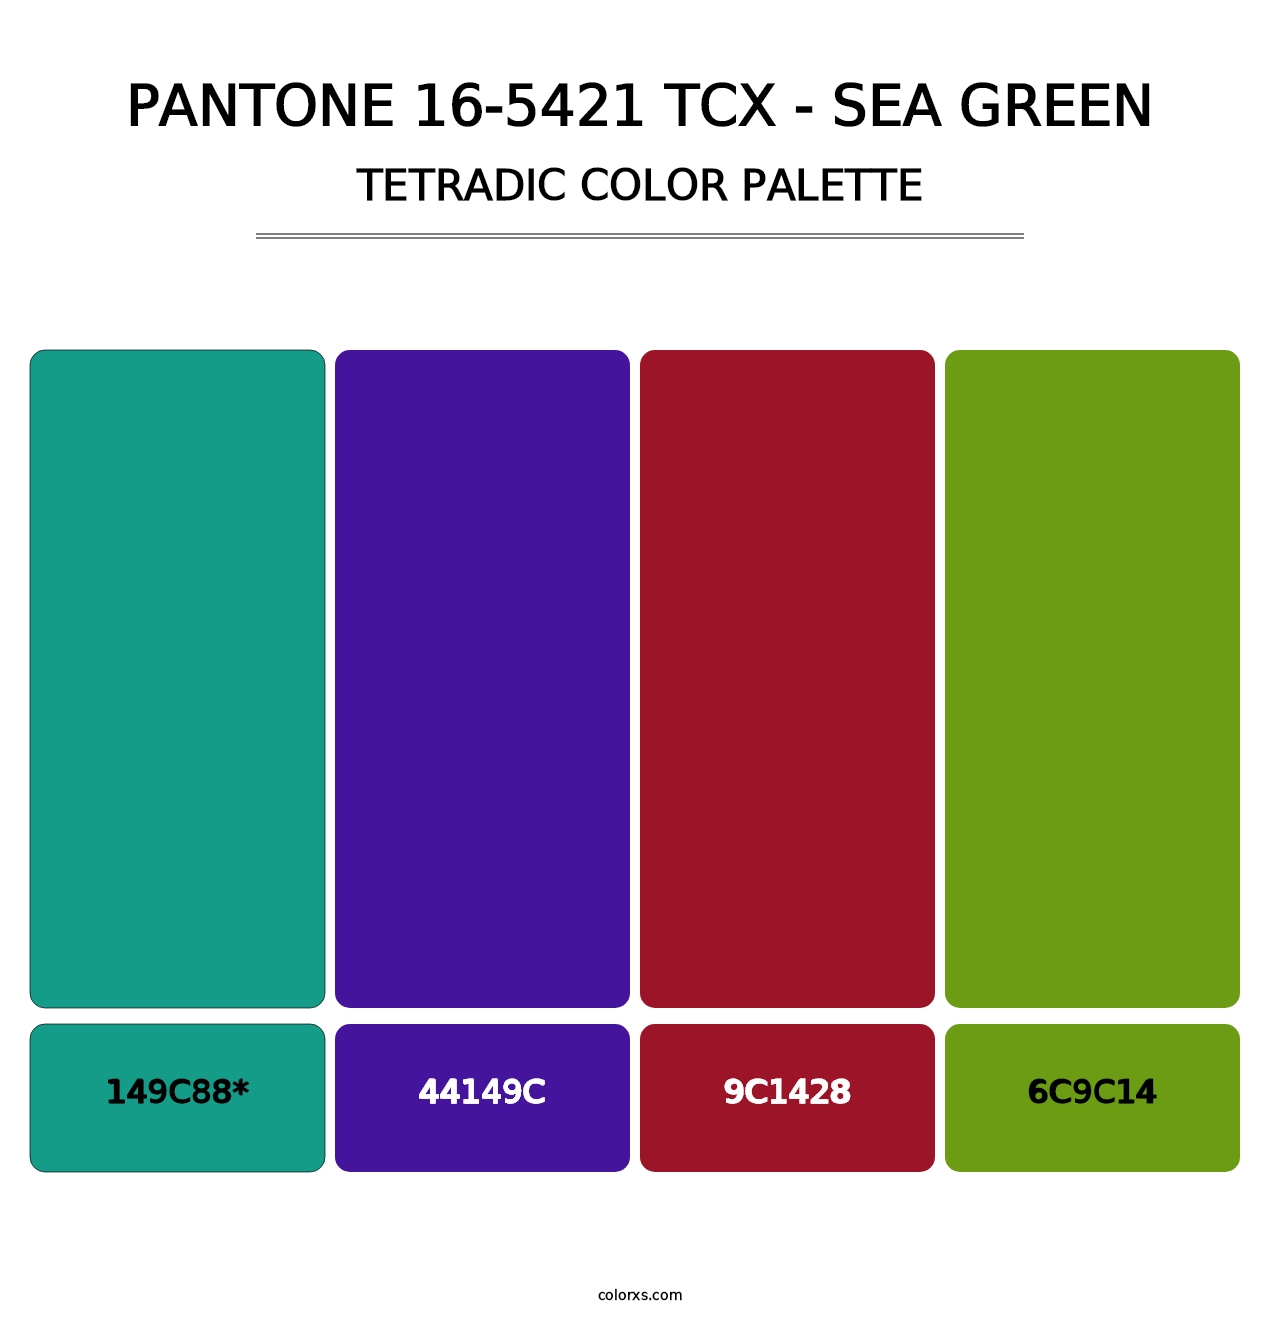 PANTONE 16-5421 TCX - Sea Green - Tetradic Color Palette